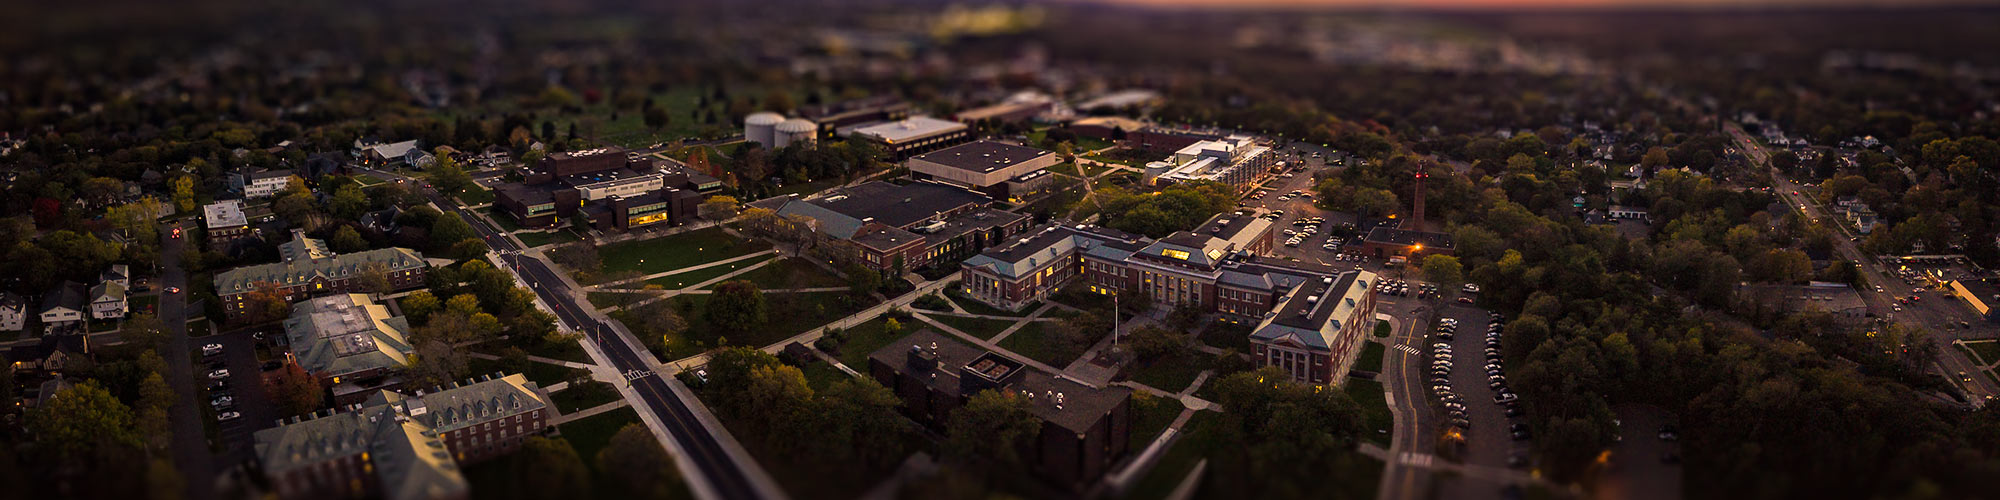 Aerial shot of campus at dusk